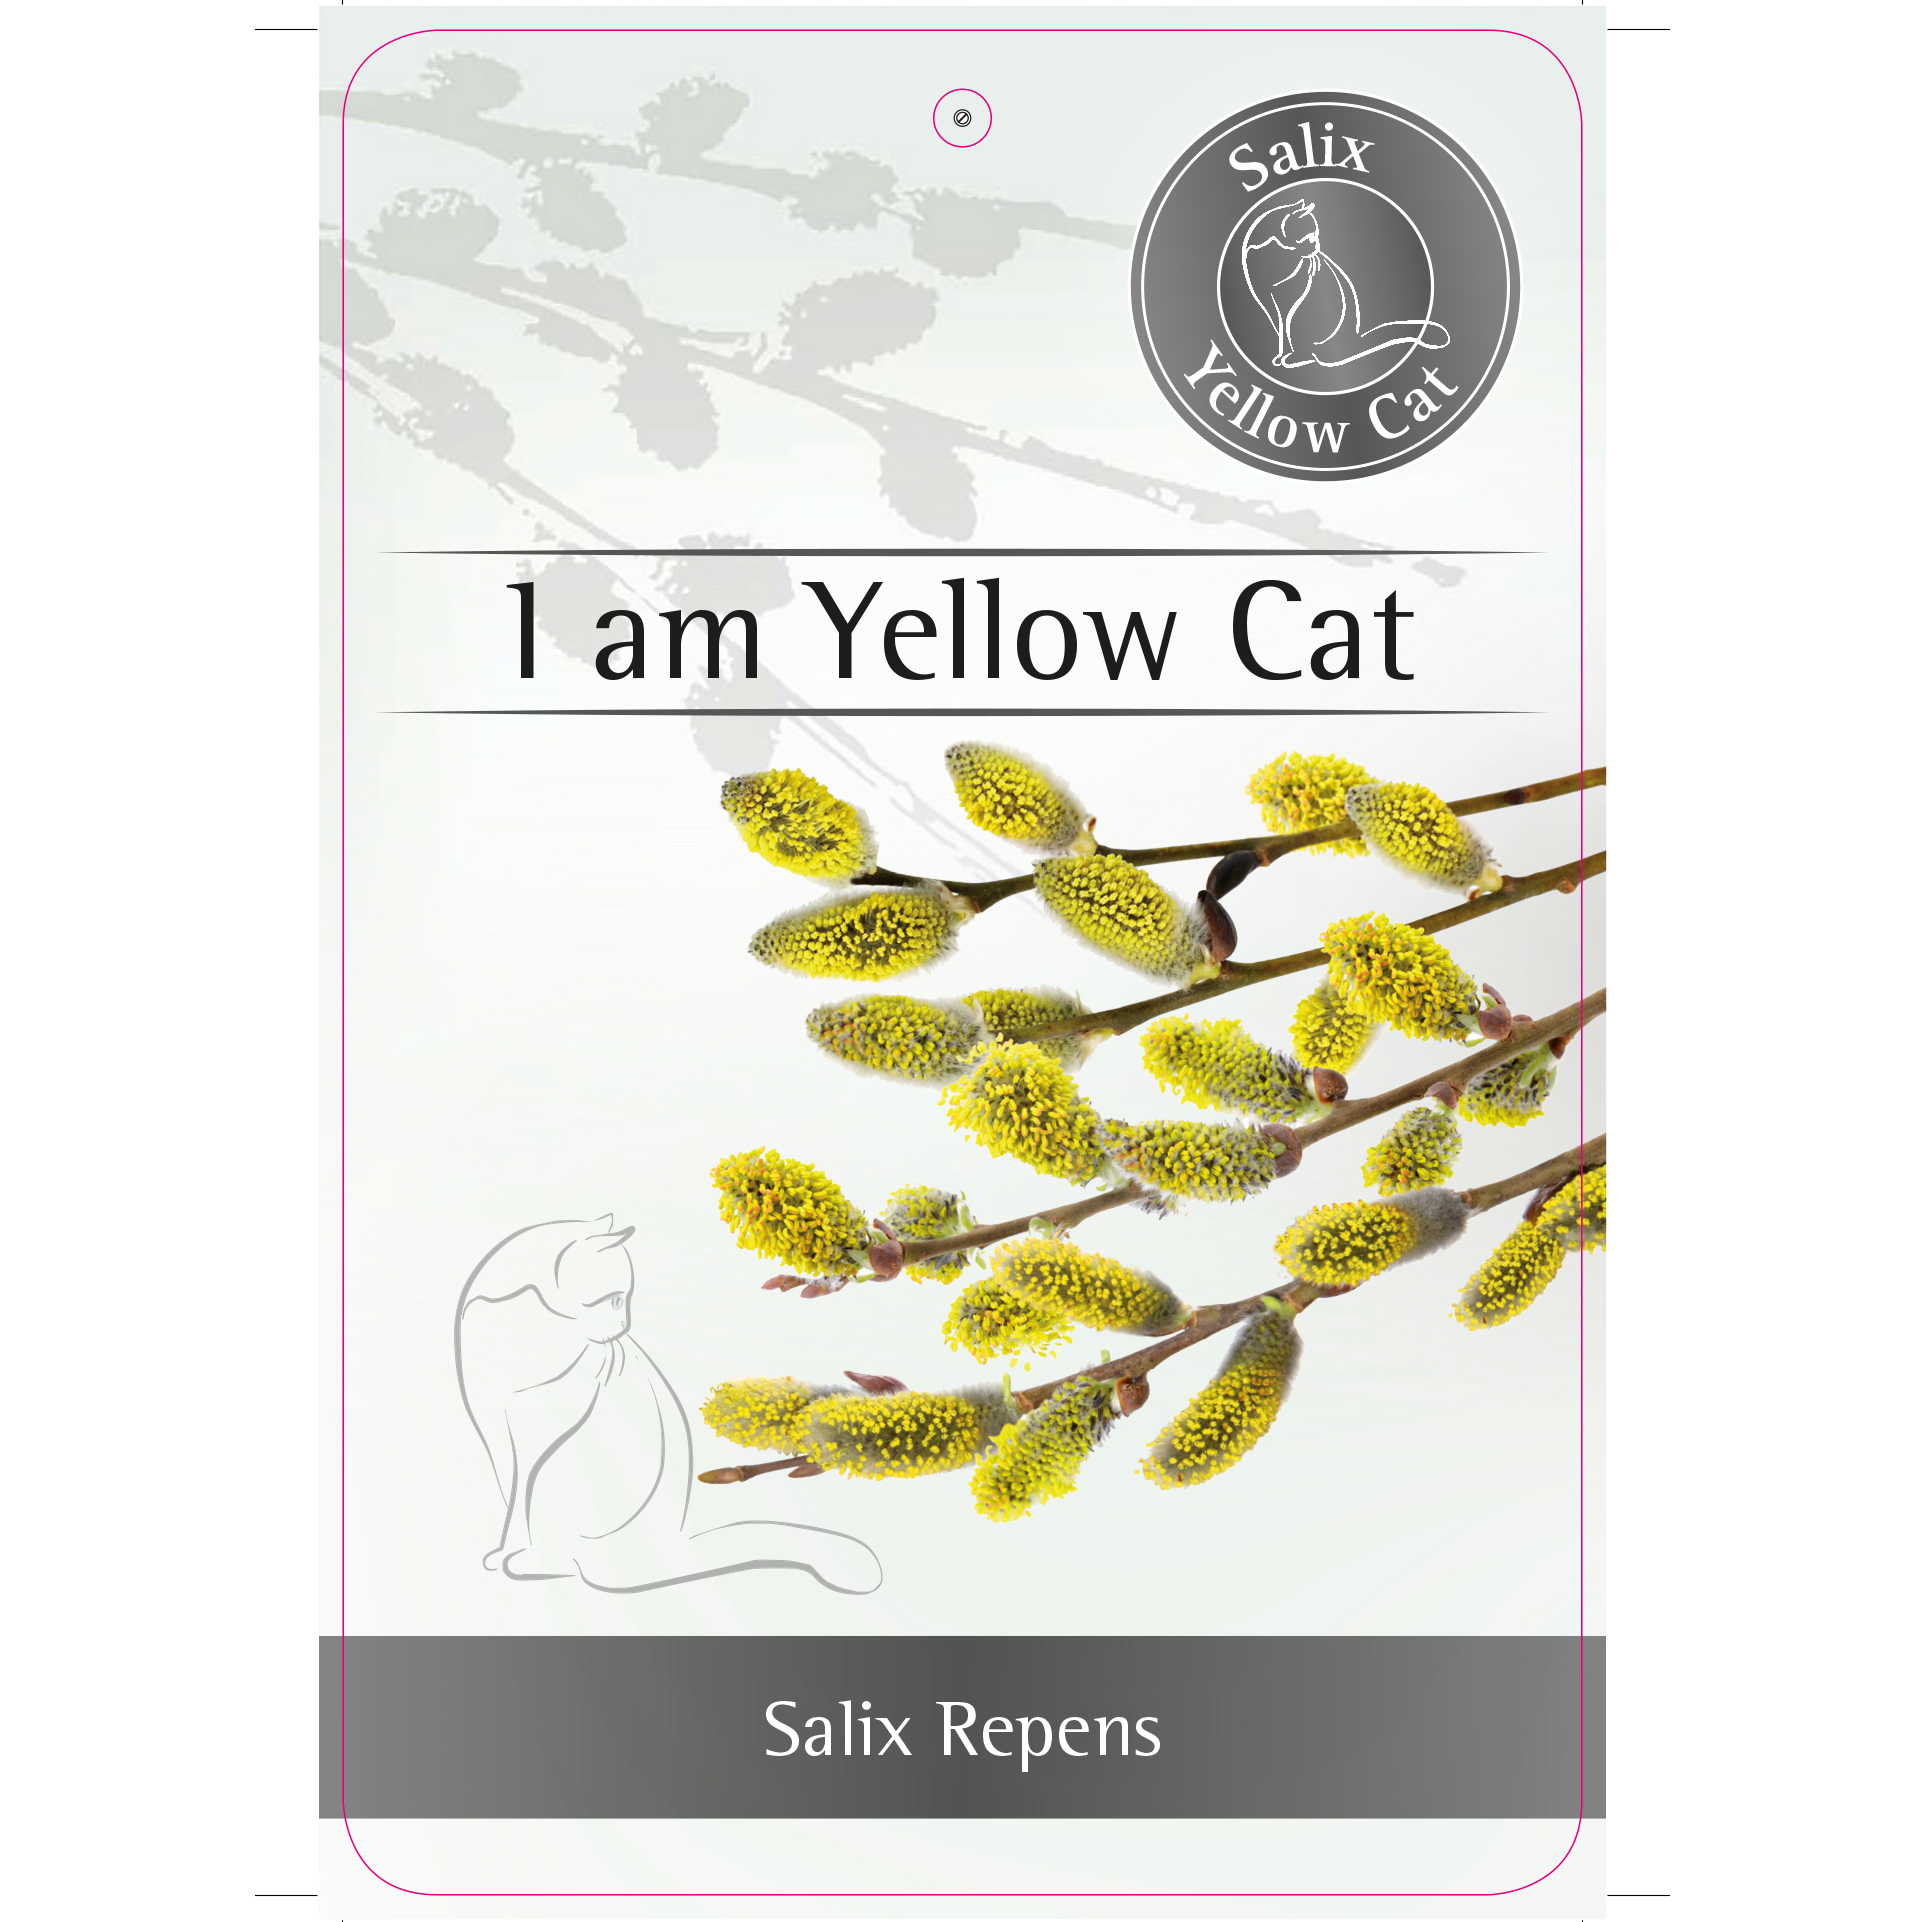 'I am Yellow Cat'